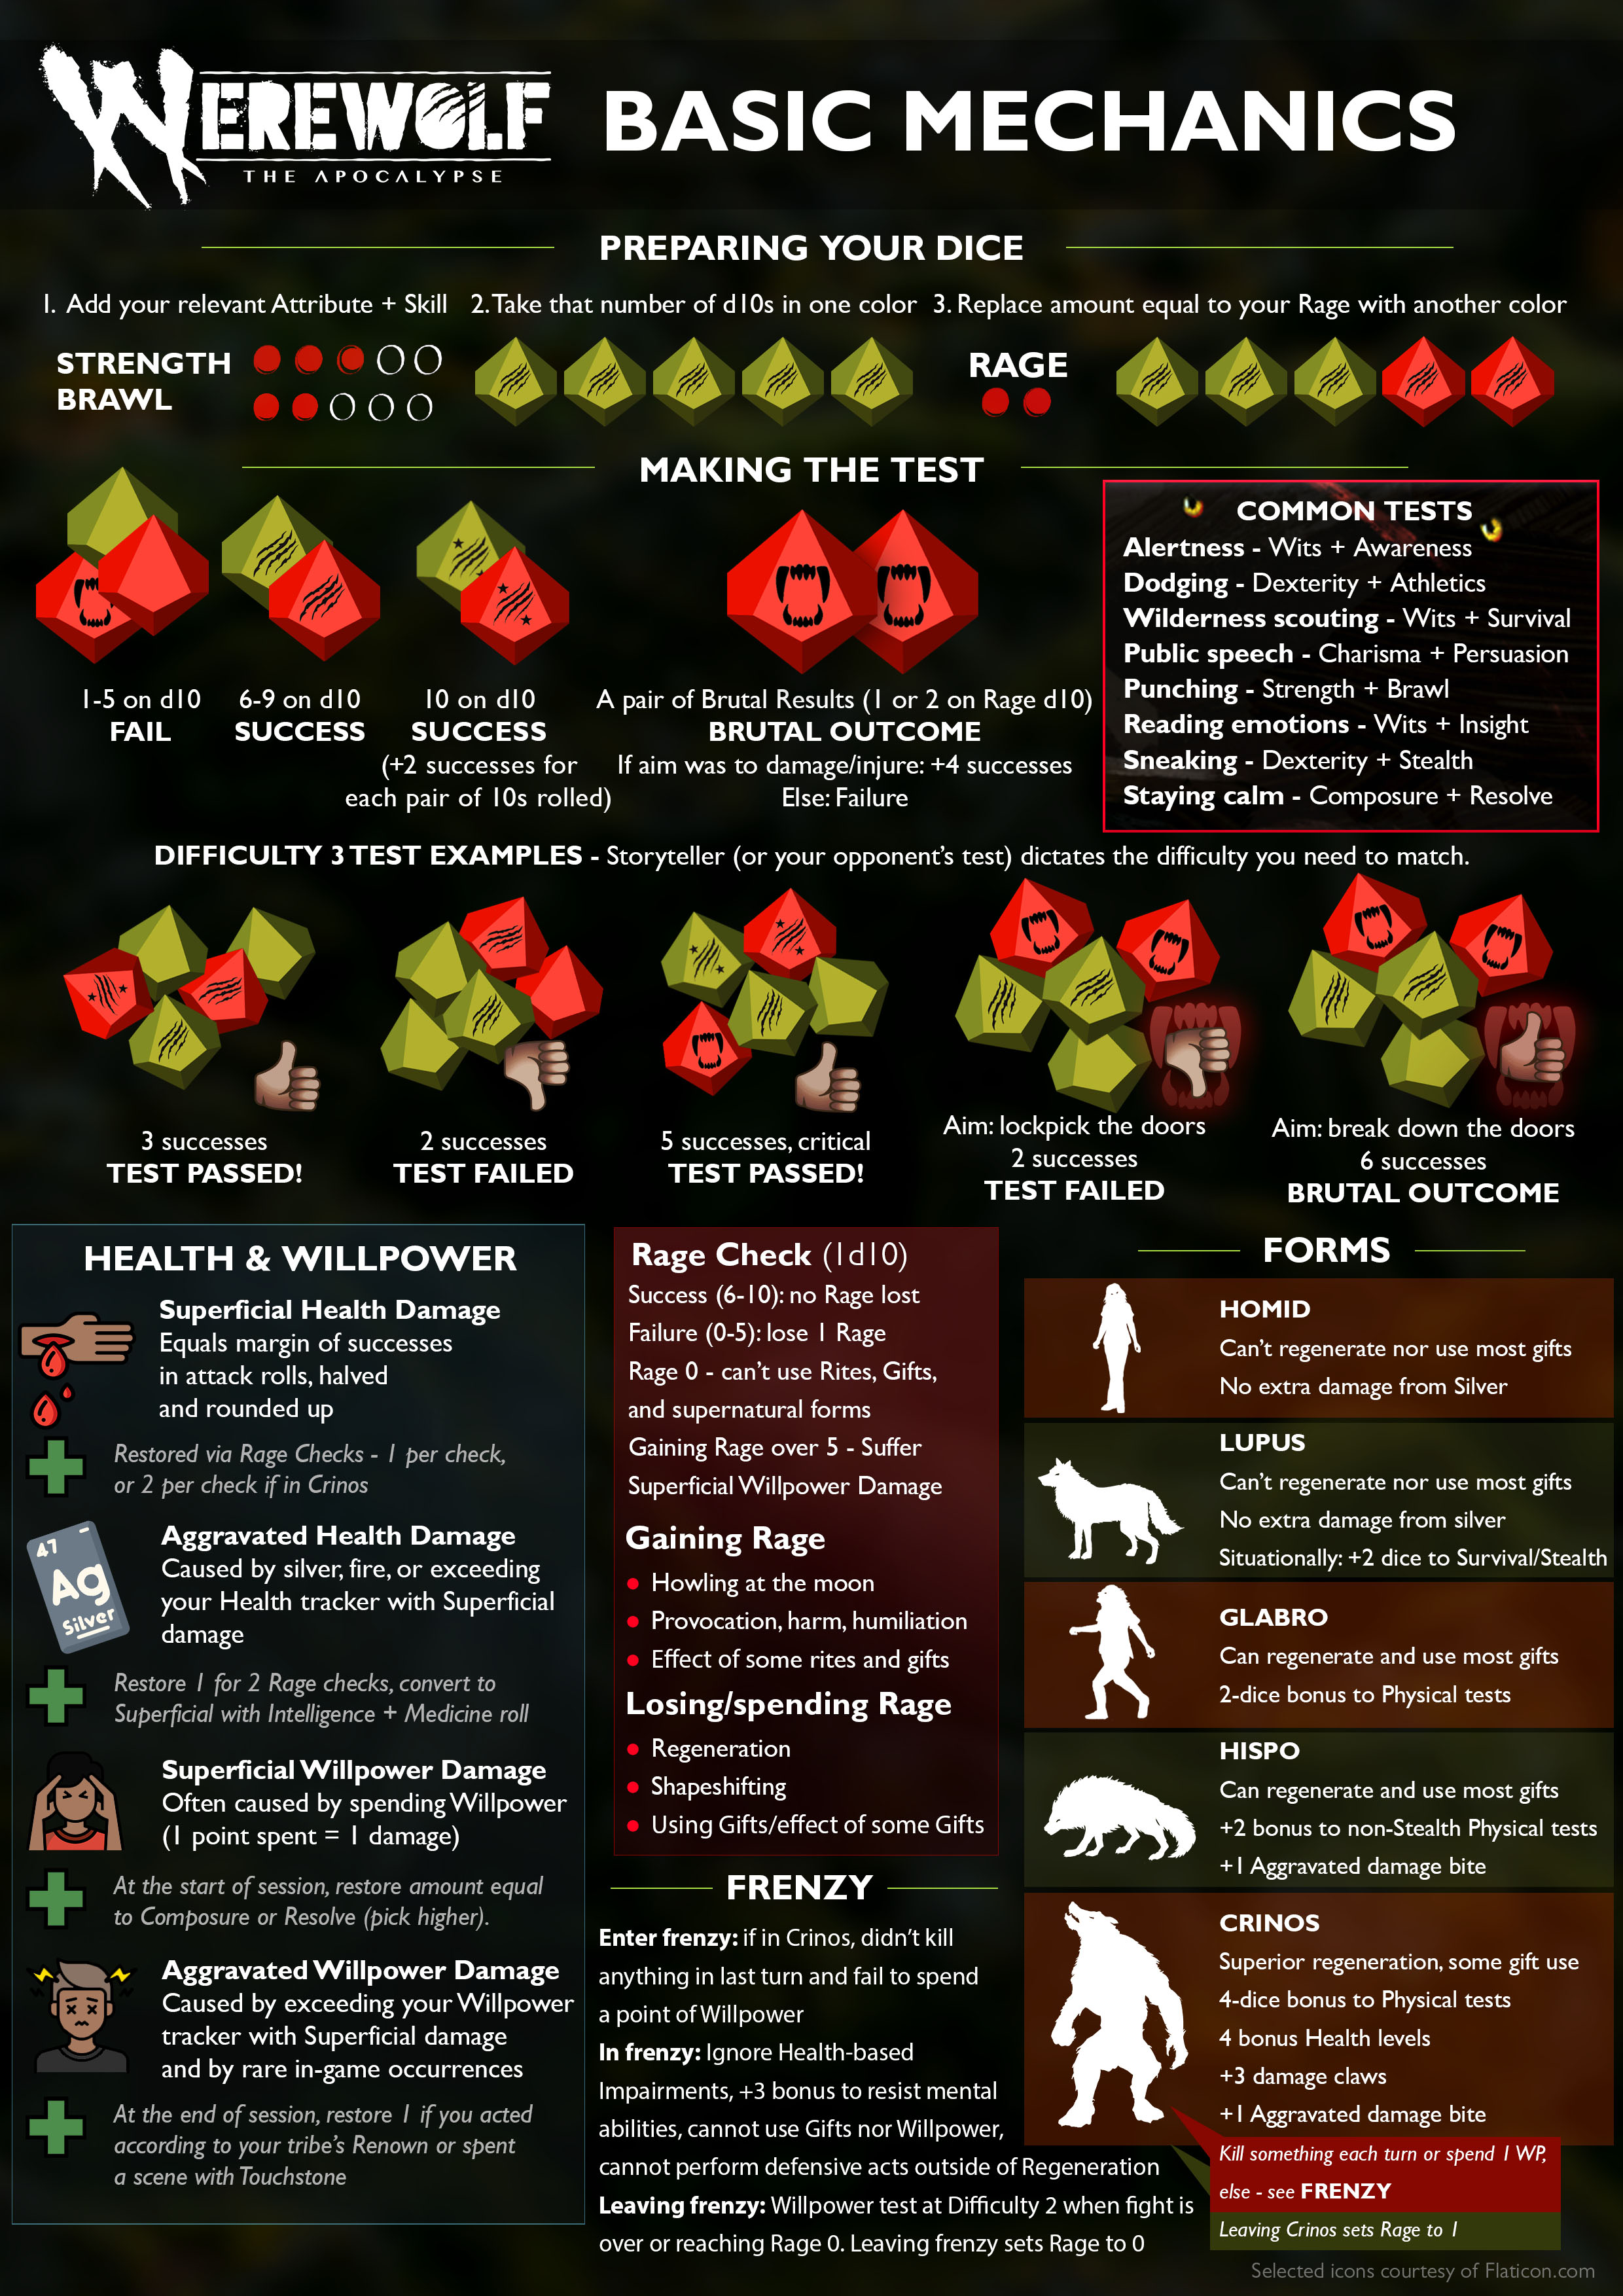 World of Darkness News: Month of Darkness Day 9 - Vampire: The Masquerade  Basic Mechanics Infographic - Paradox Interactive